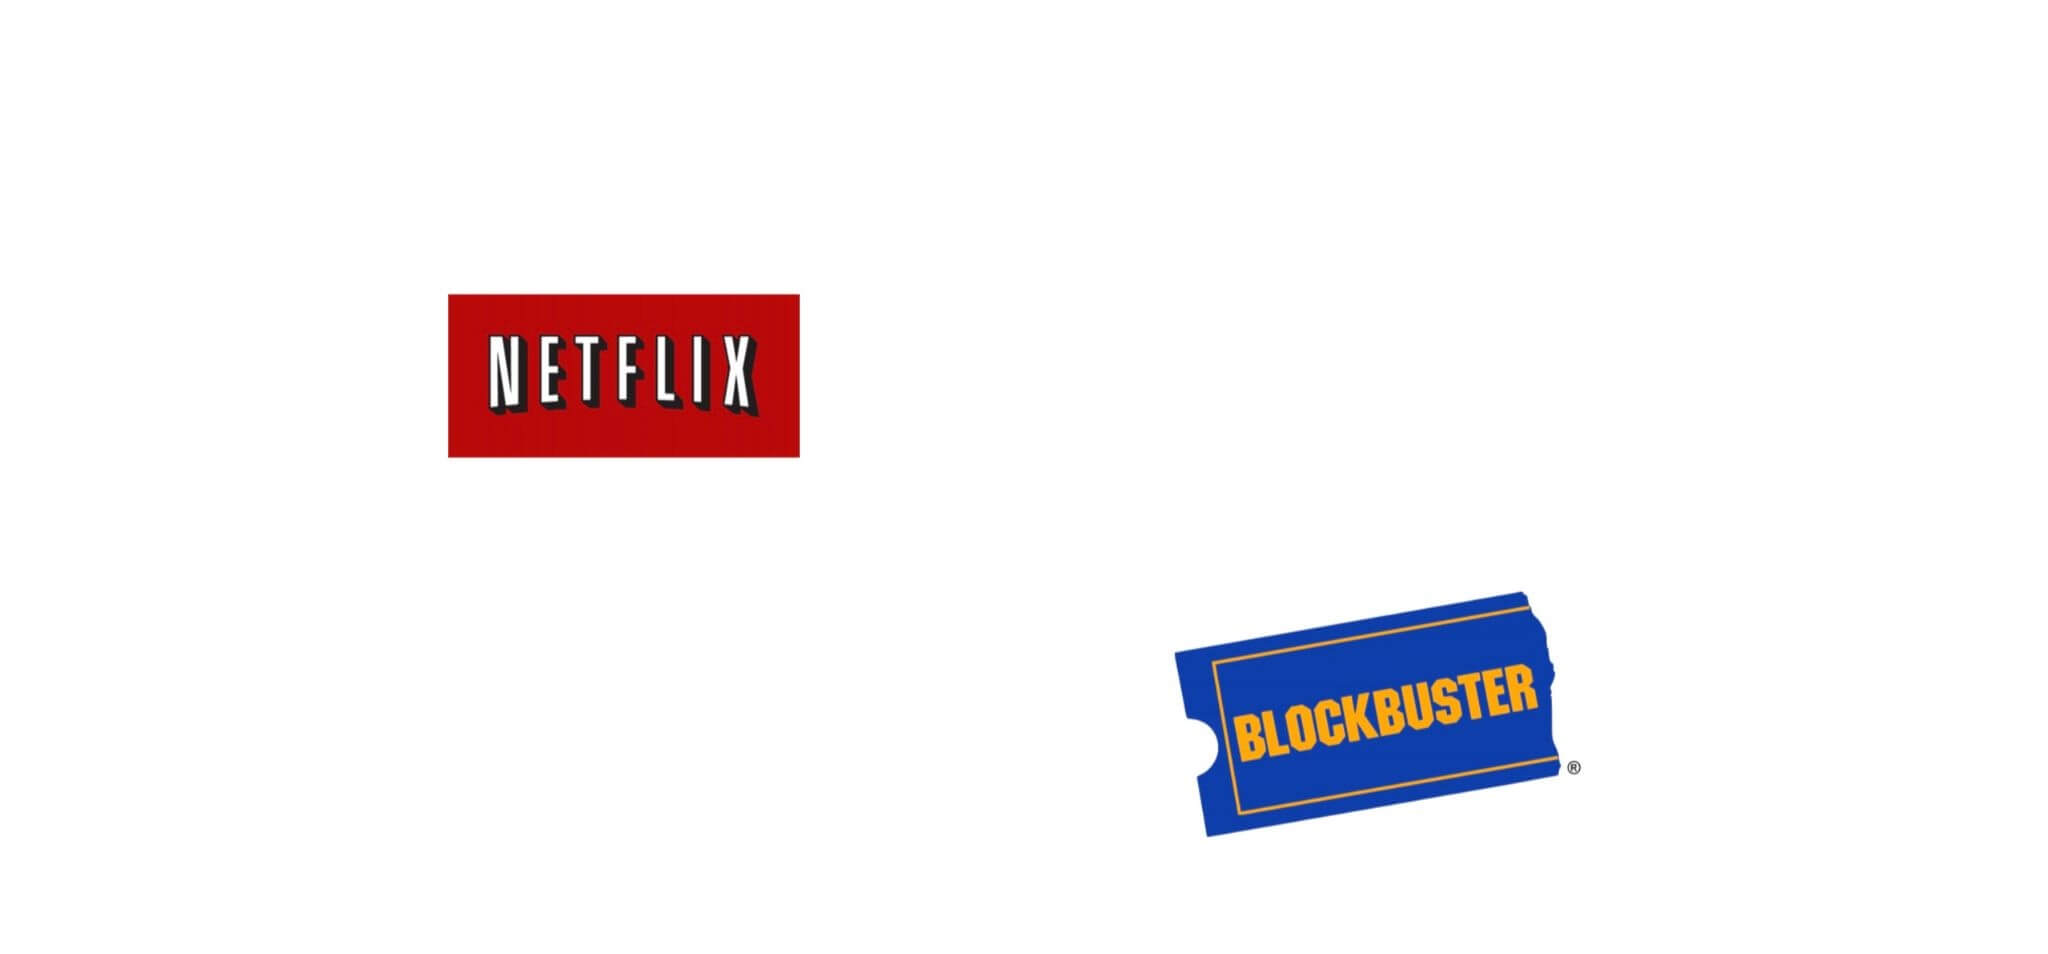 Netflix and Blockbuster logos